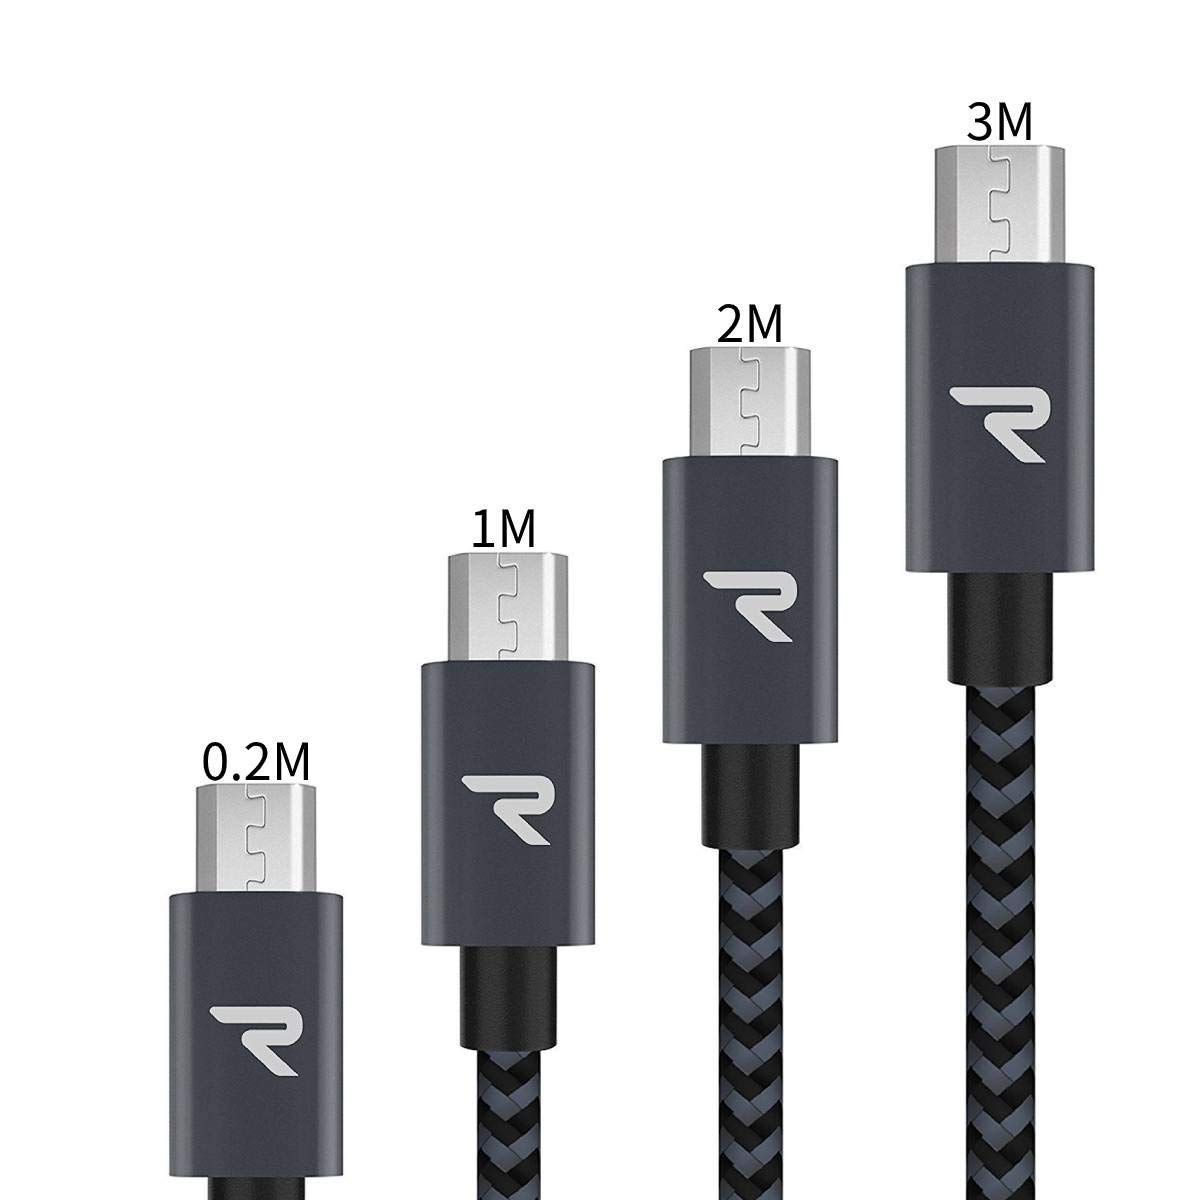 Rampow Micro USB Type-Bケーブル【0.2M+1M+2M+3M/黒】 2.4A急速充電